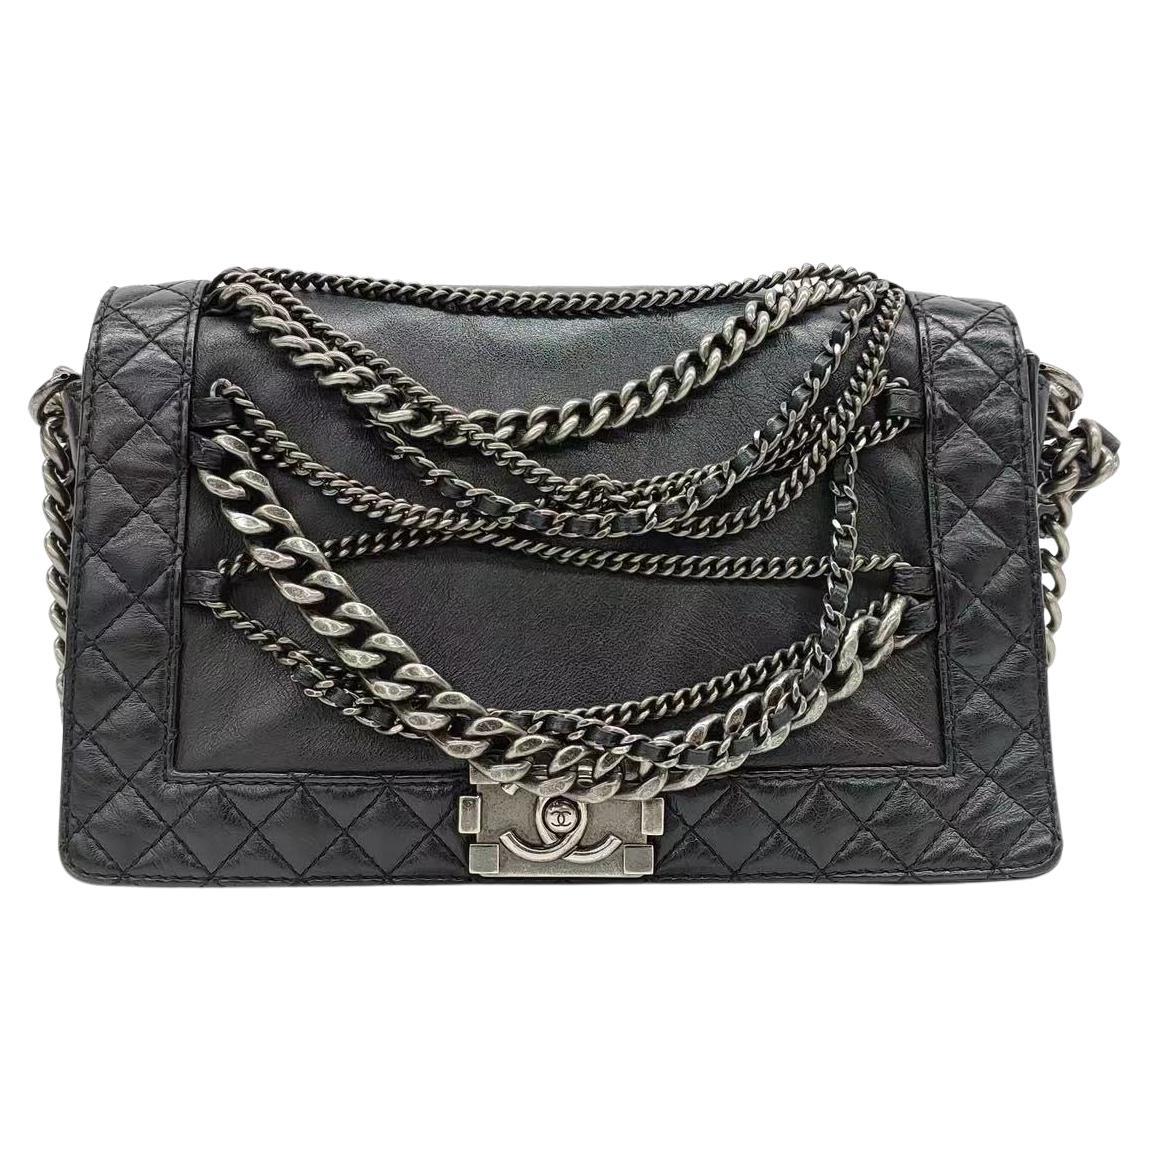 Chanel Enchained Boy Bag 2012 Black Leather Medium Flap Bag For Sale